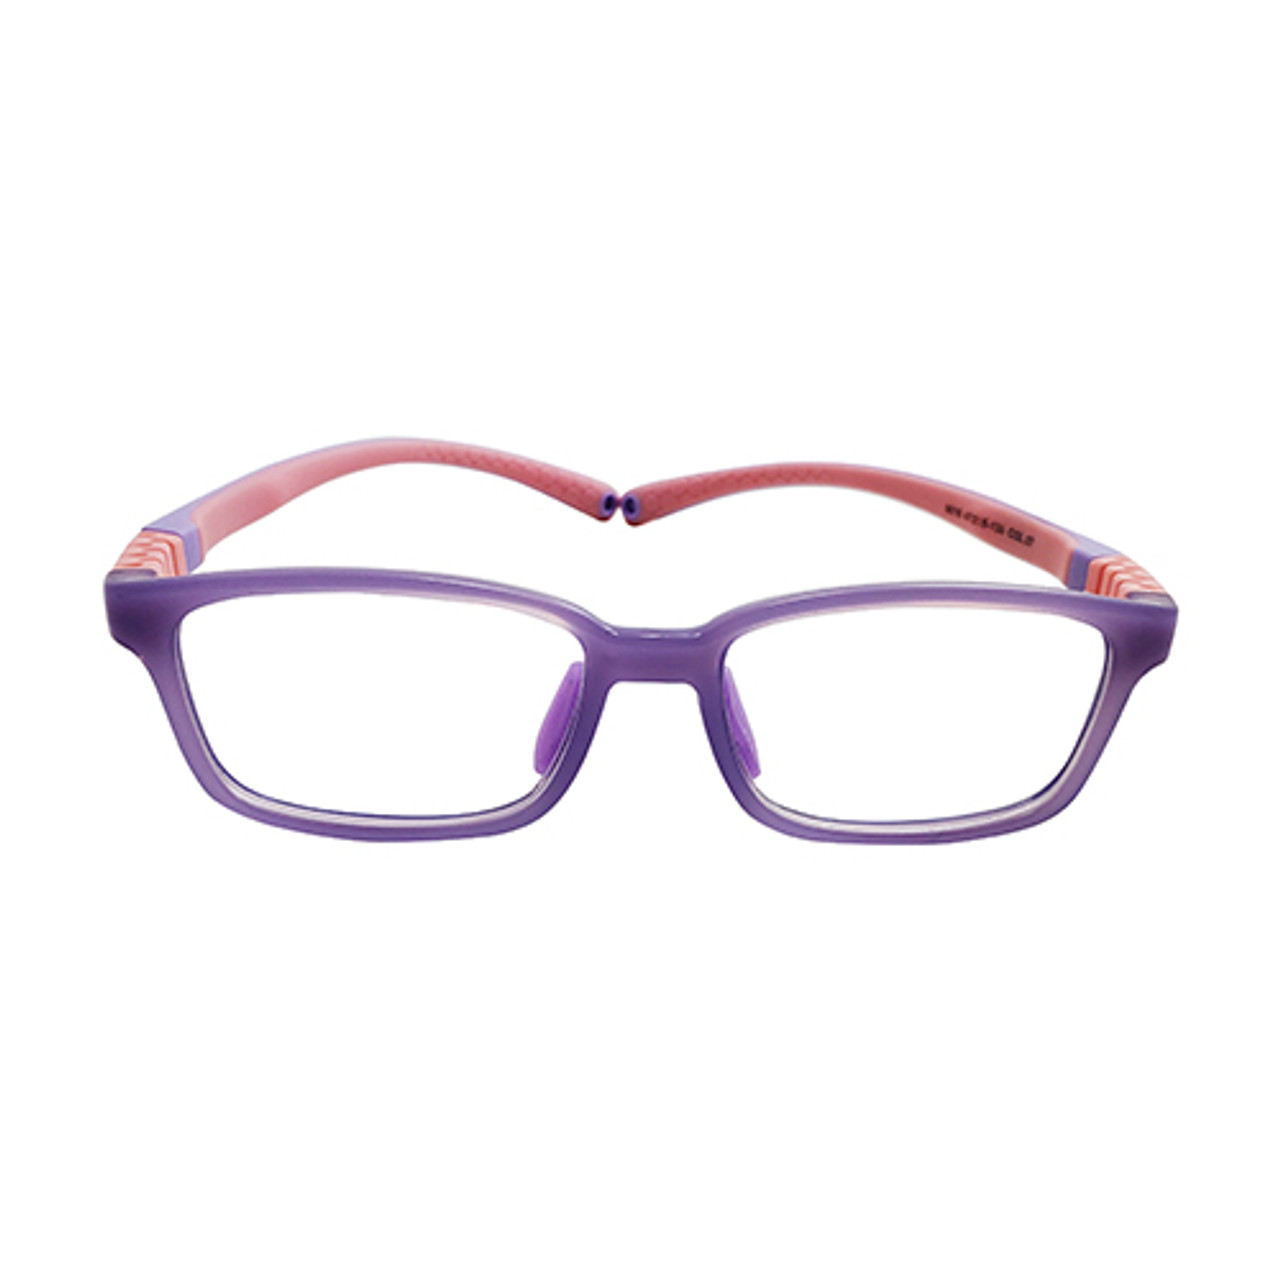 Kids Flexible Glasses Purple - Size 47 - Adjustable Strap - Kids ...